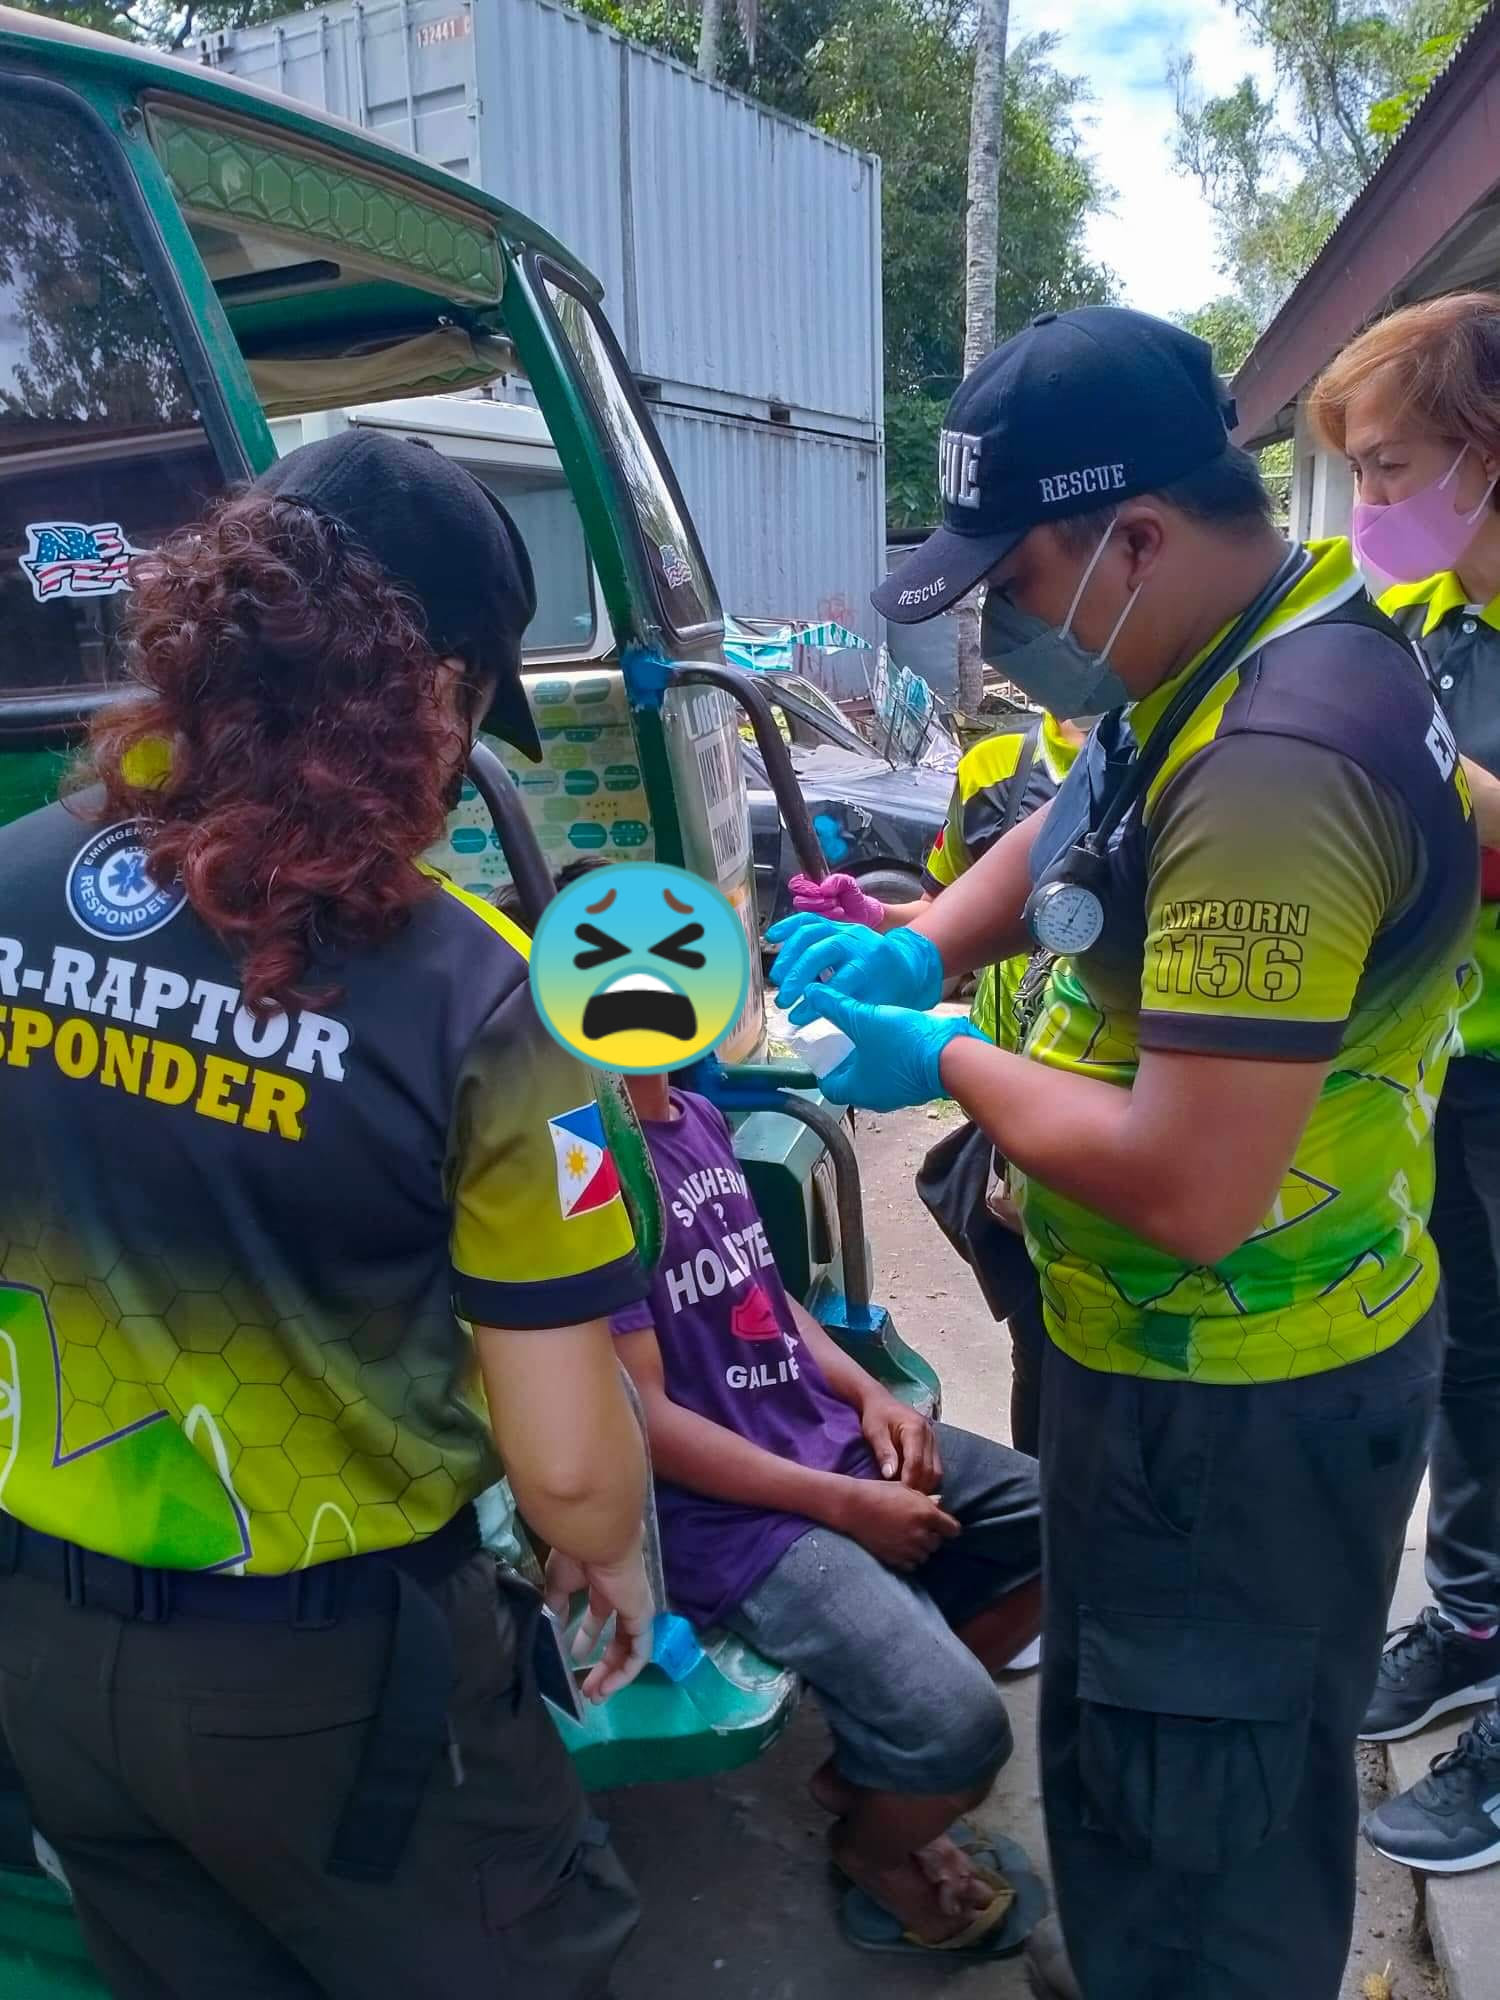 EMR Raptor volunteer responded victim of mauling at comelec office – Mario Eleno Canoy Jr.